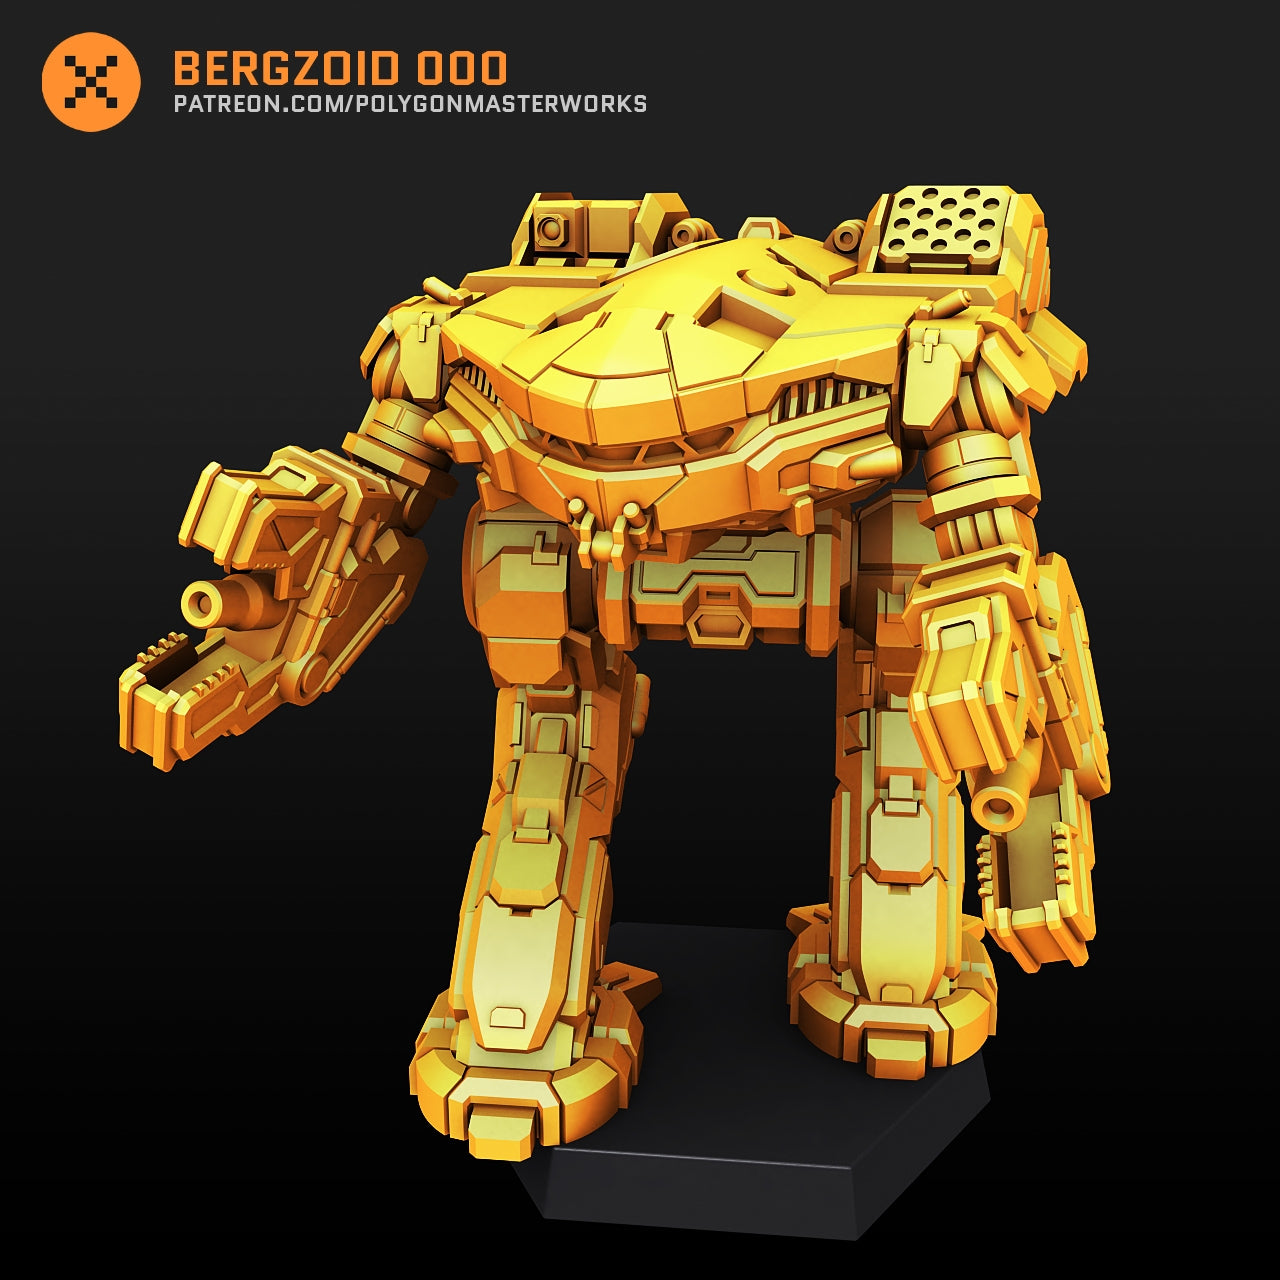 Bergzoid 000 (By PMW) Alternate Battletech Mechwarrior Miniatures